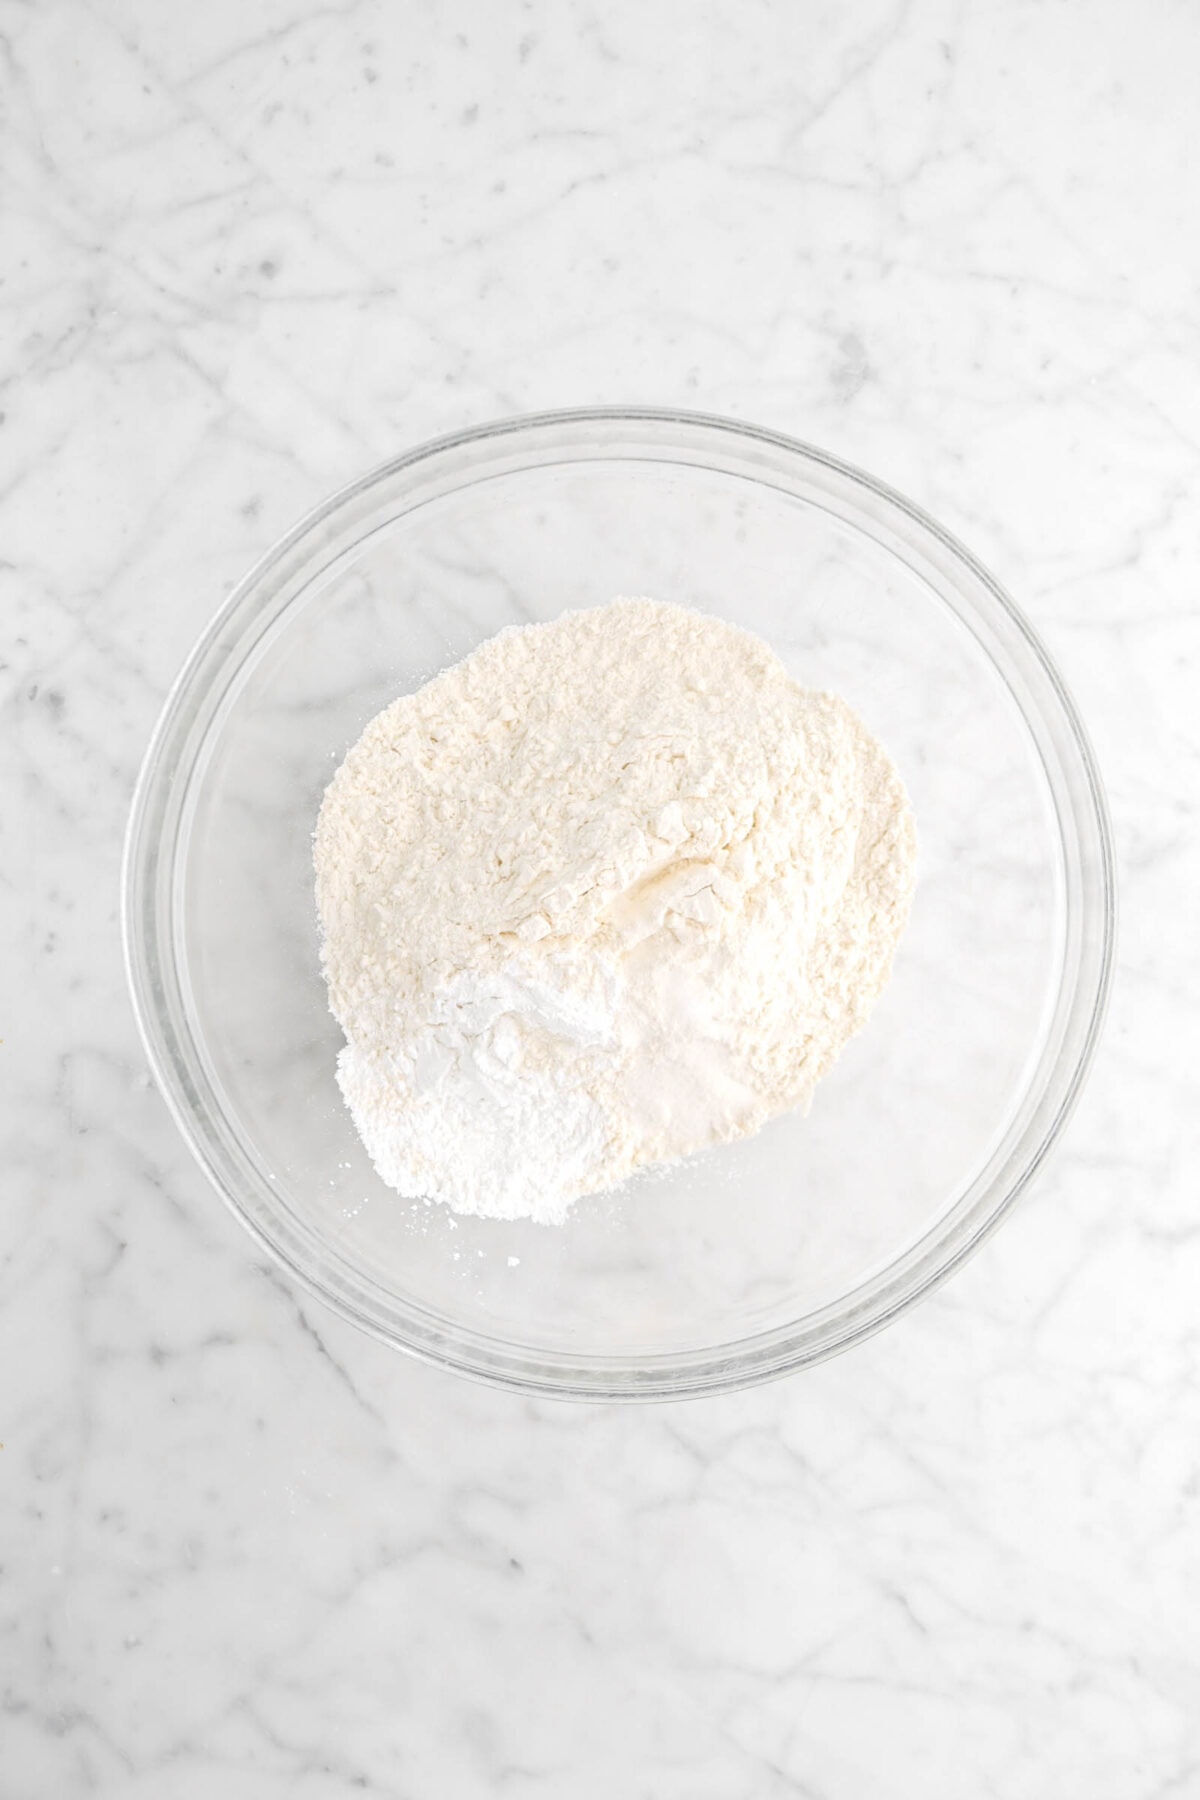 flour, salt, and baking powder in glass bowl